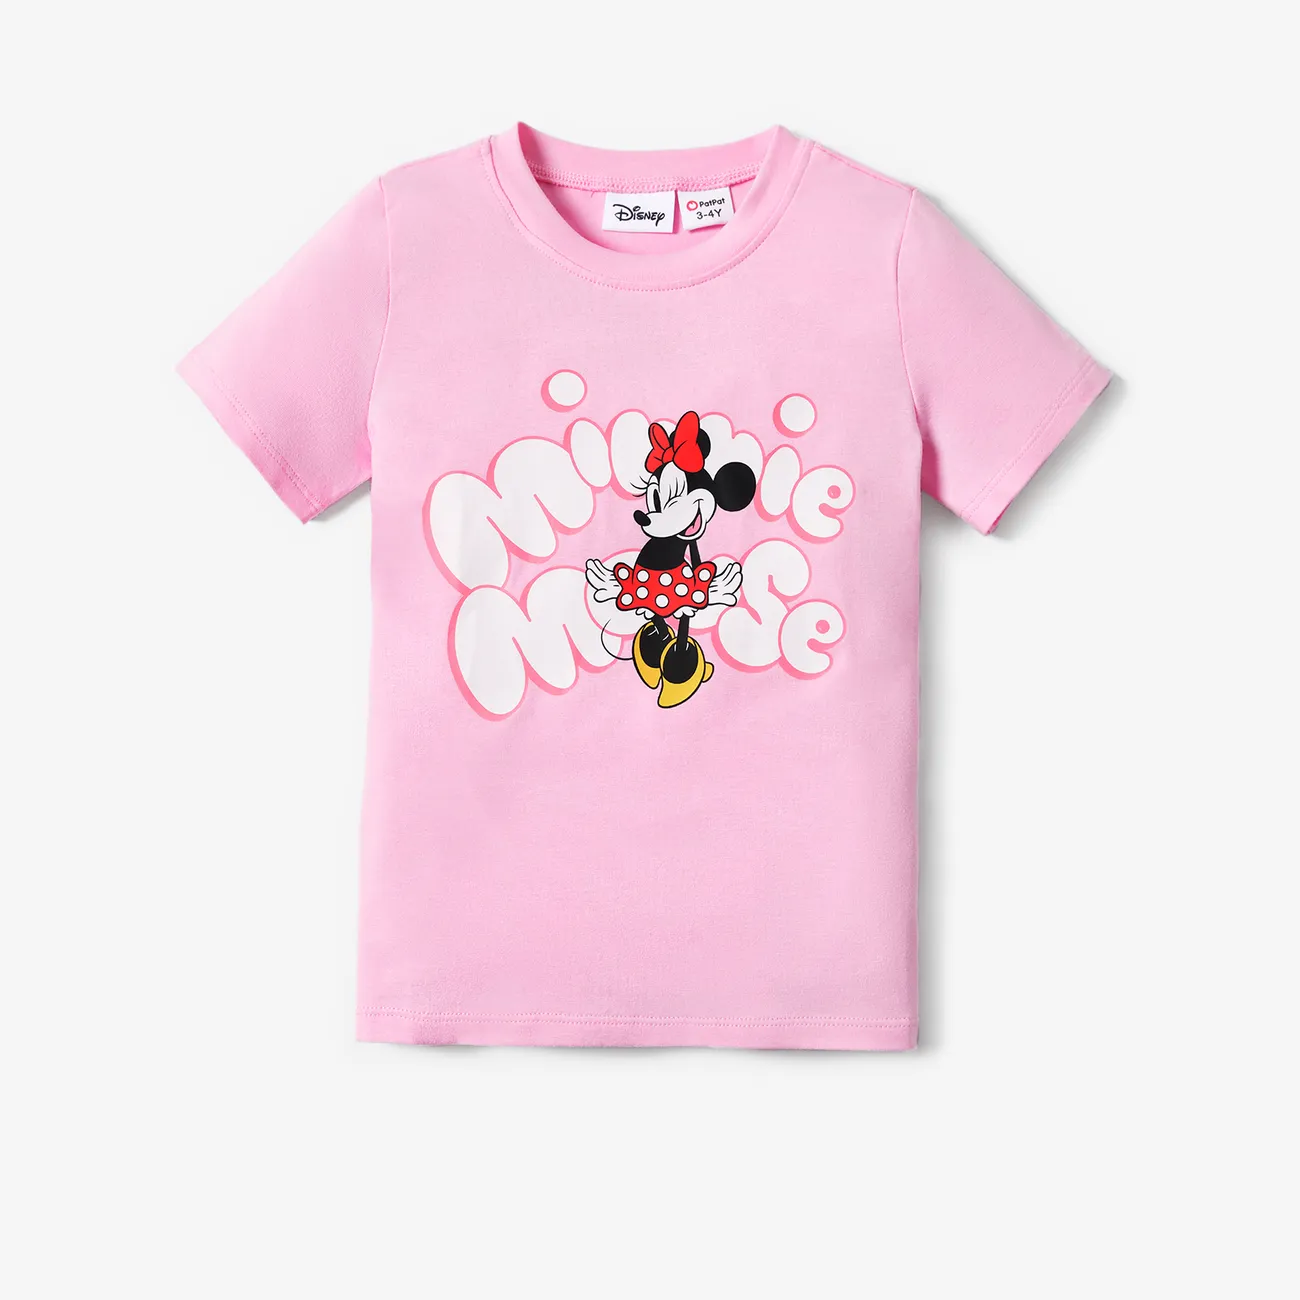 Disney Mickey and Friends Look de família Dia da Mãe Manga curta Conjuntos de roupa para a família Tops Rosa big image 1